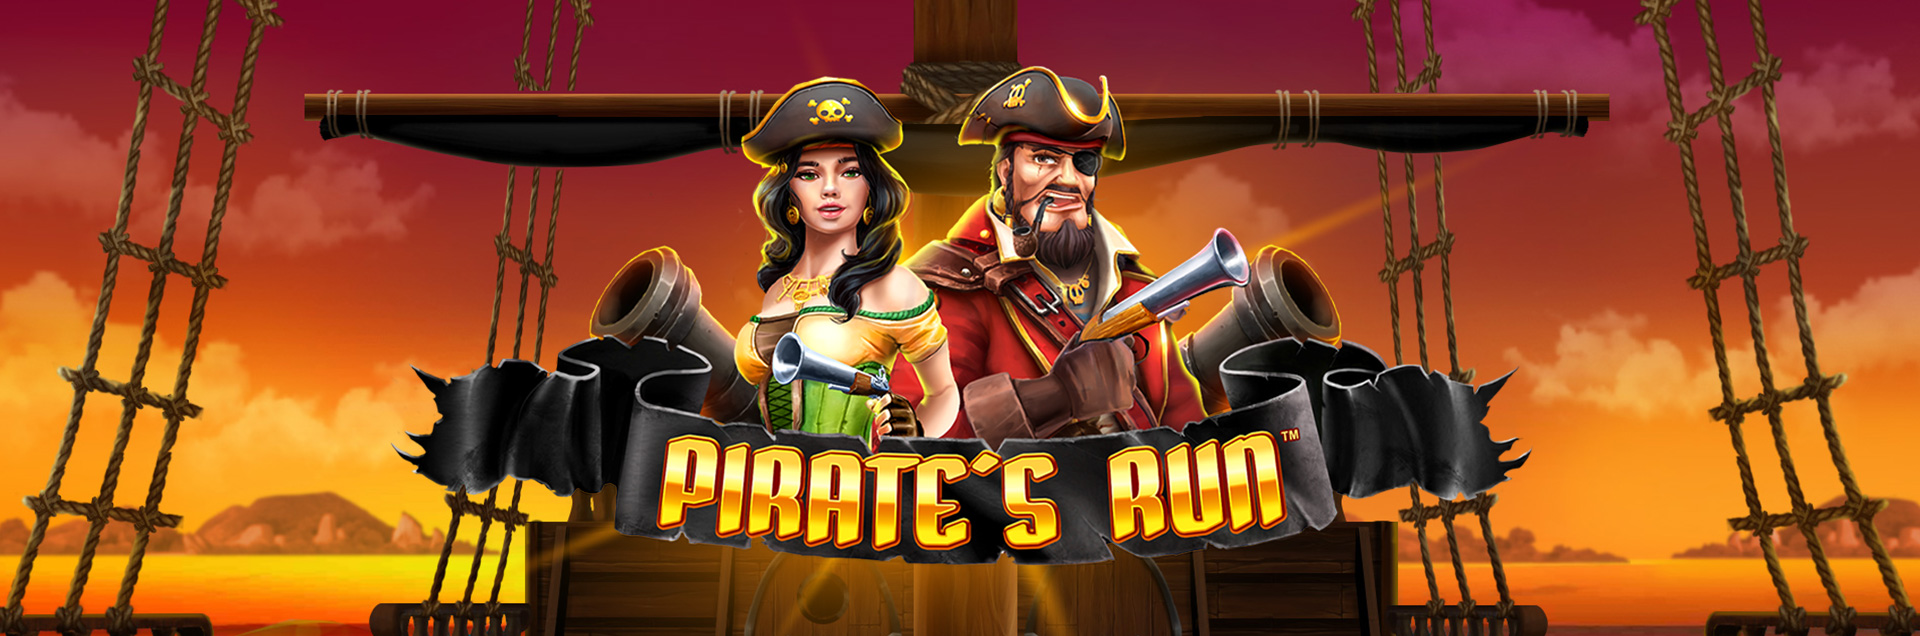 Pirates Run header games